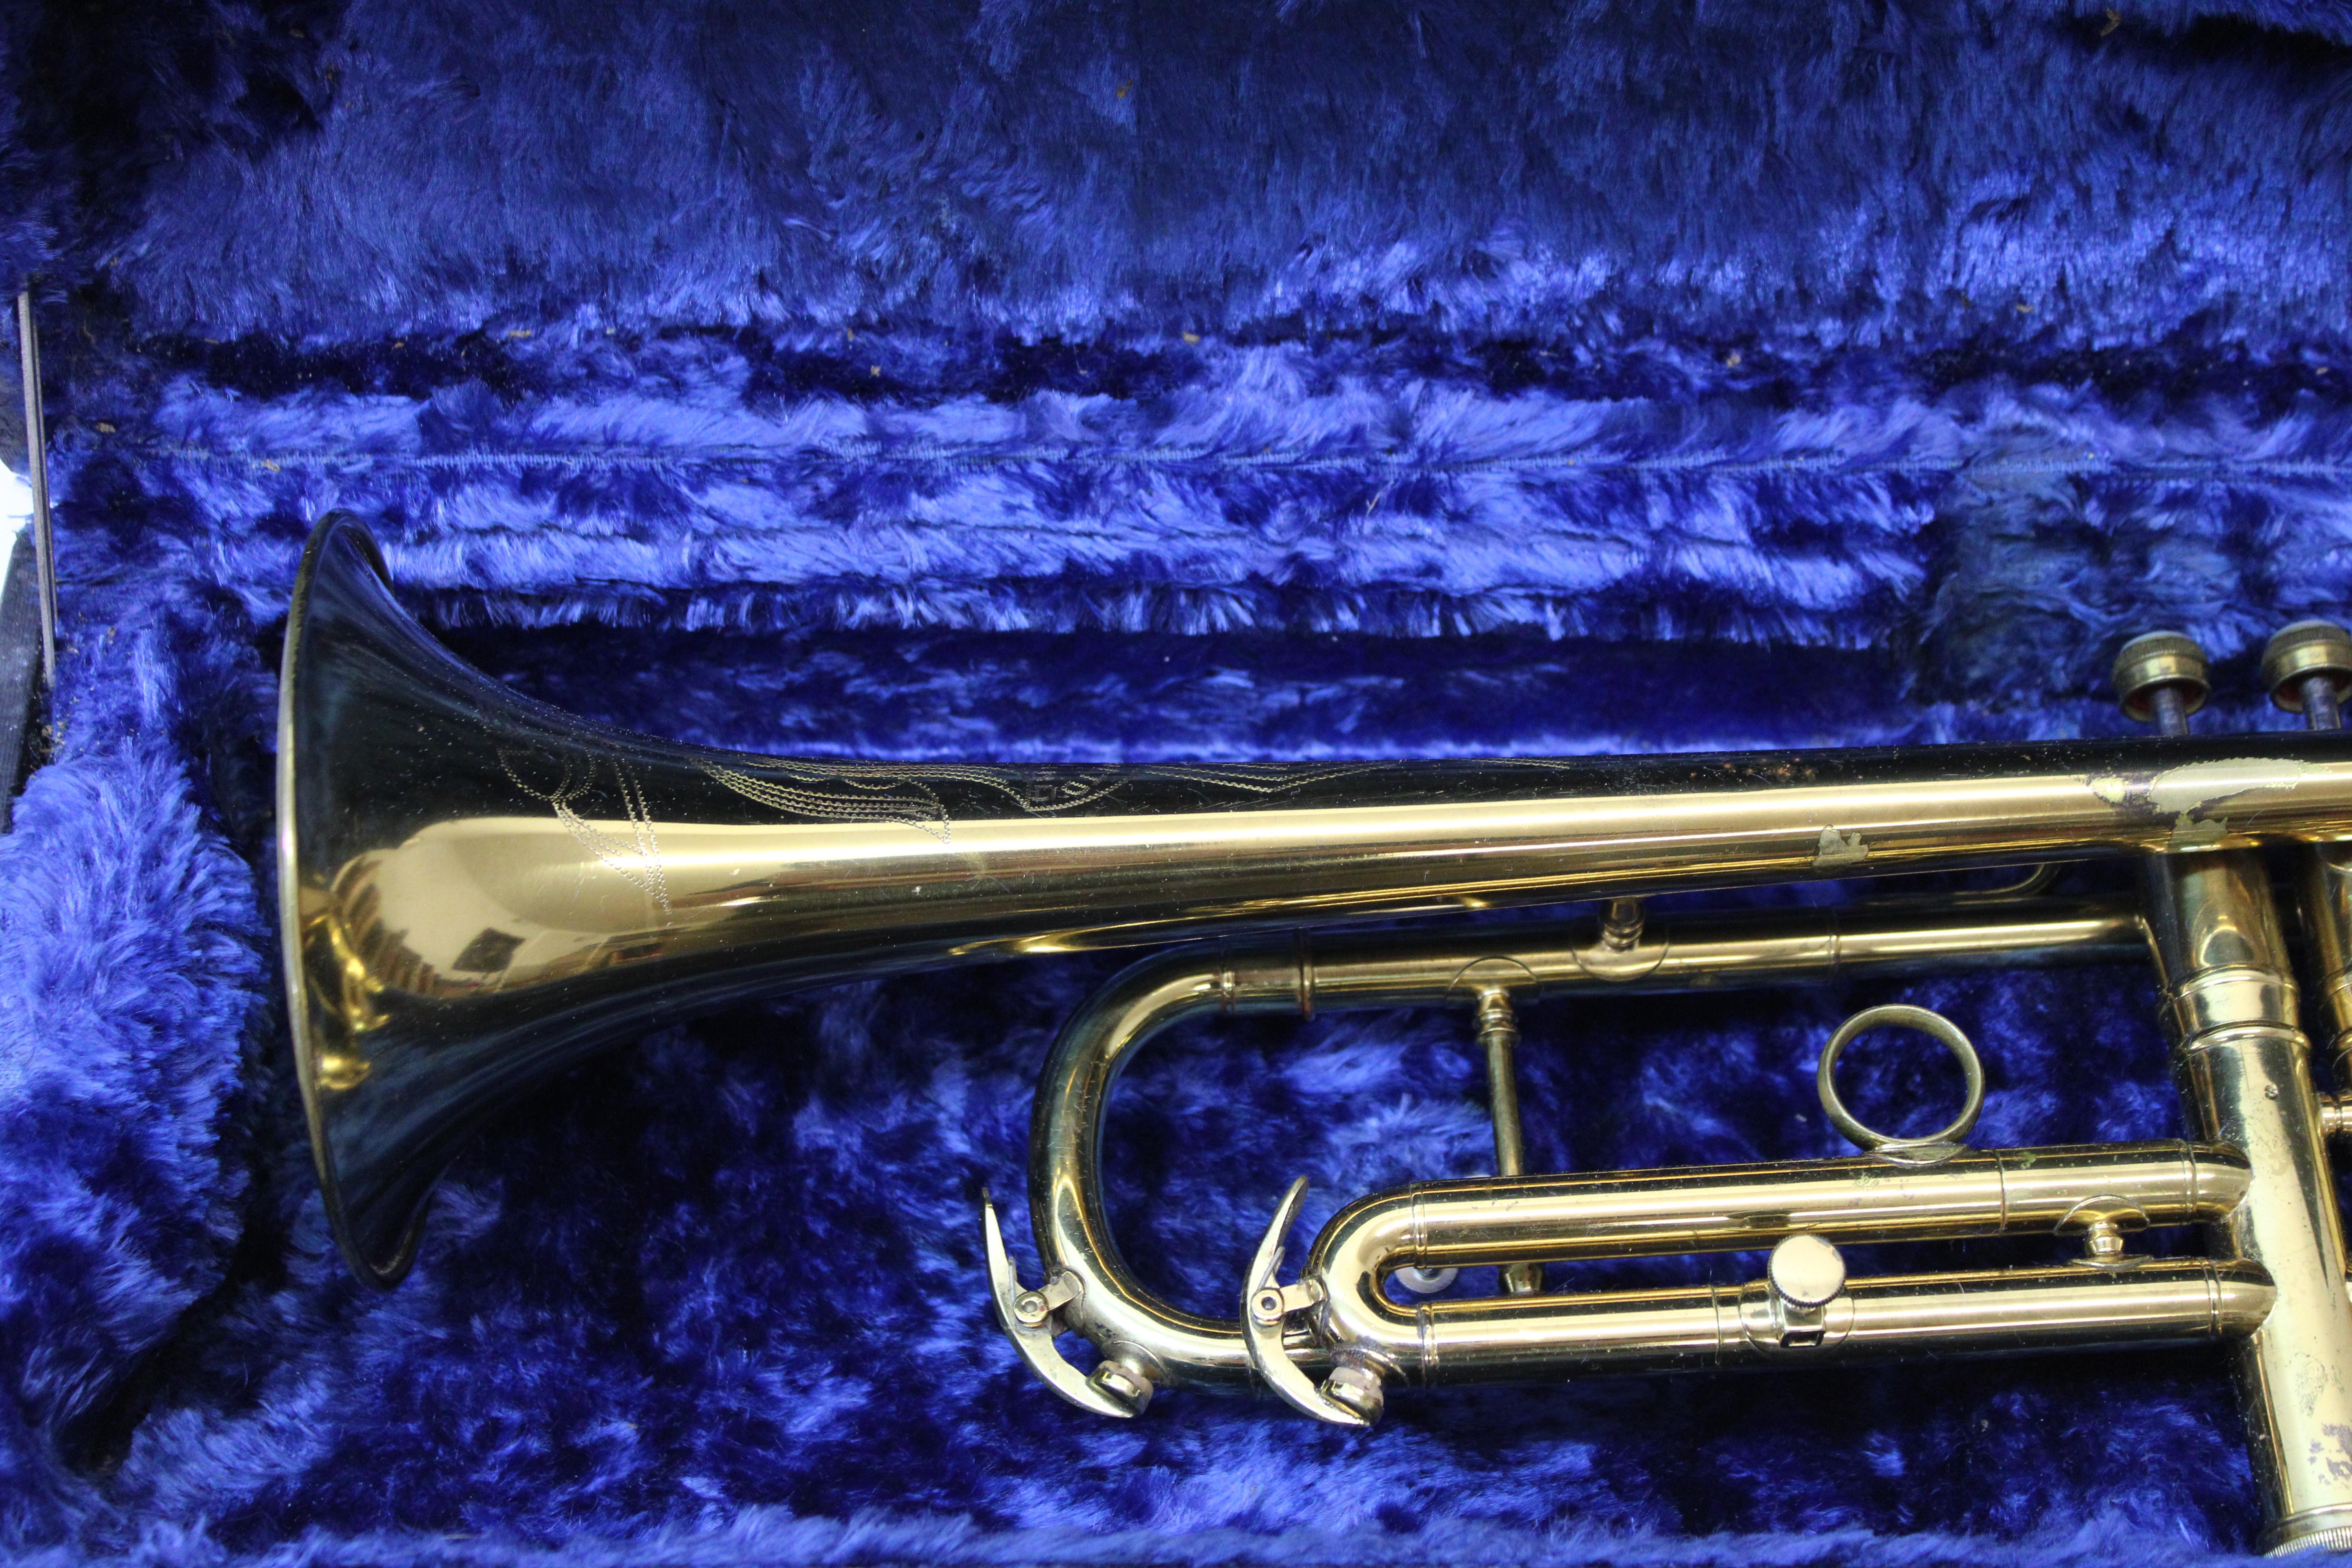 C.G. Conn 22B trumpet w/original case.
Late '50's

